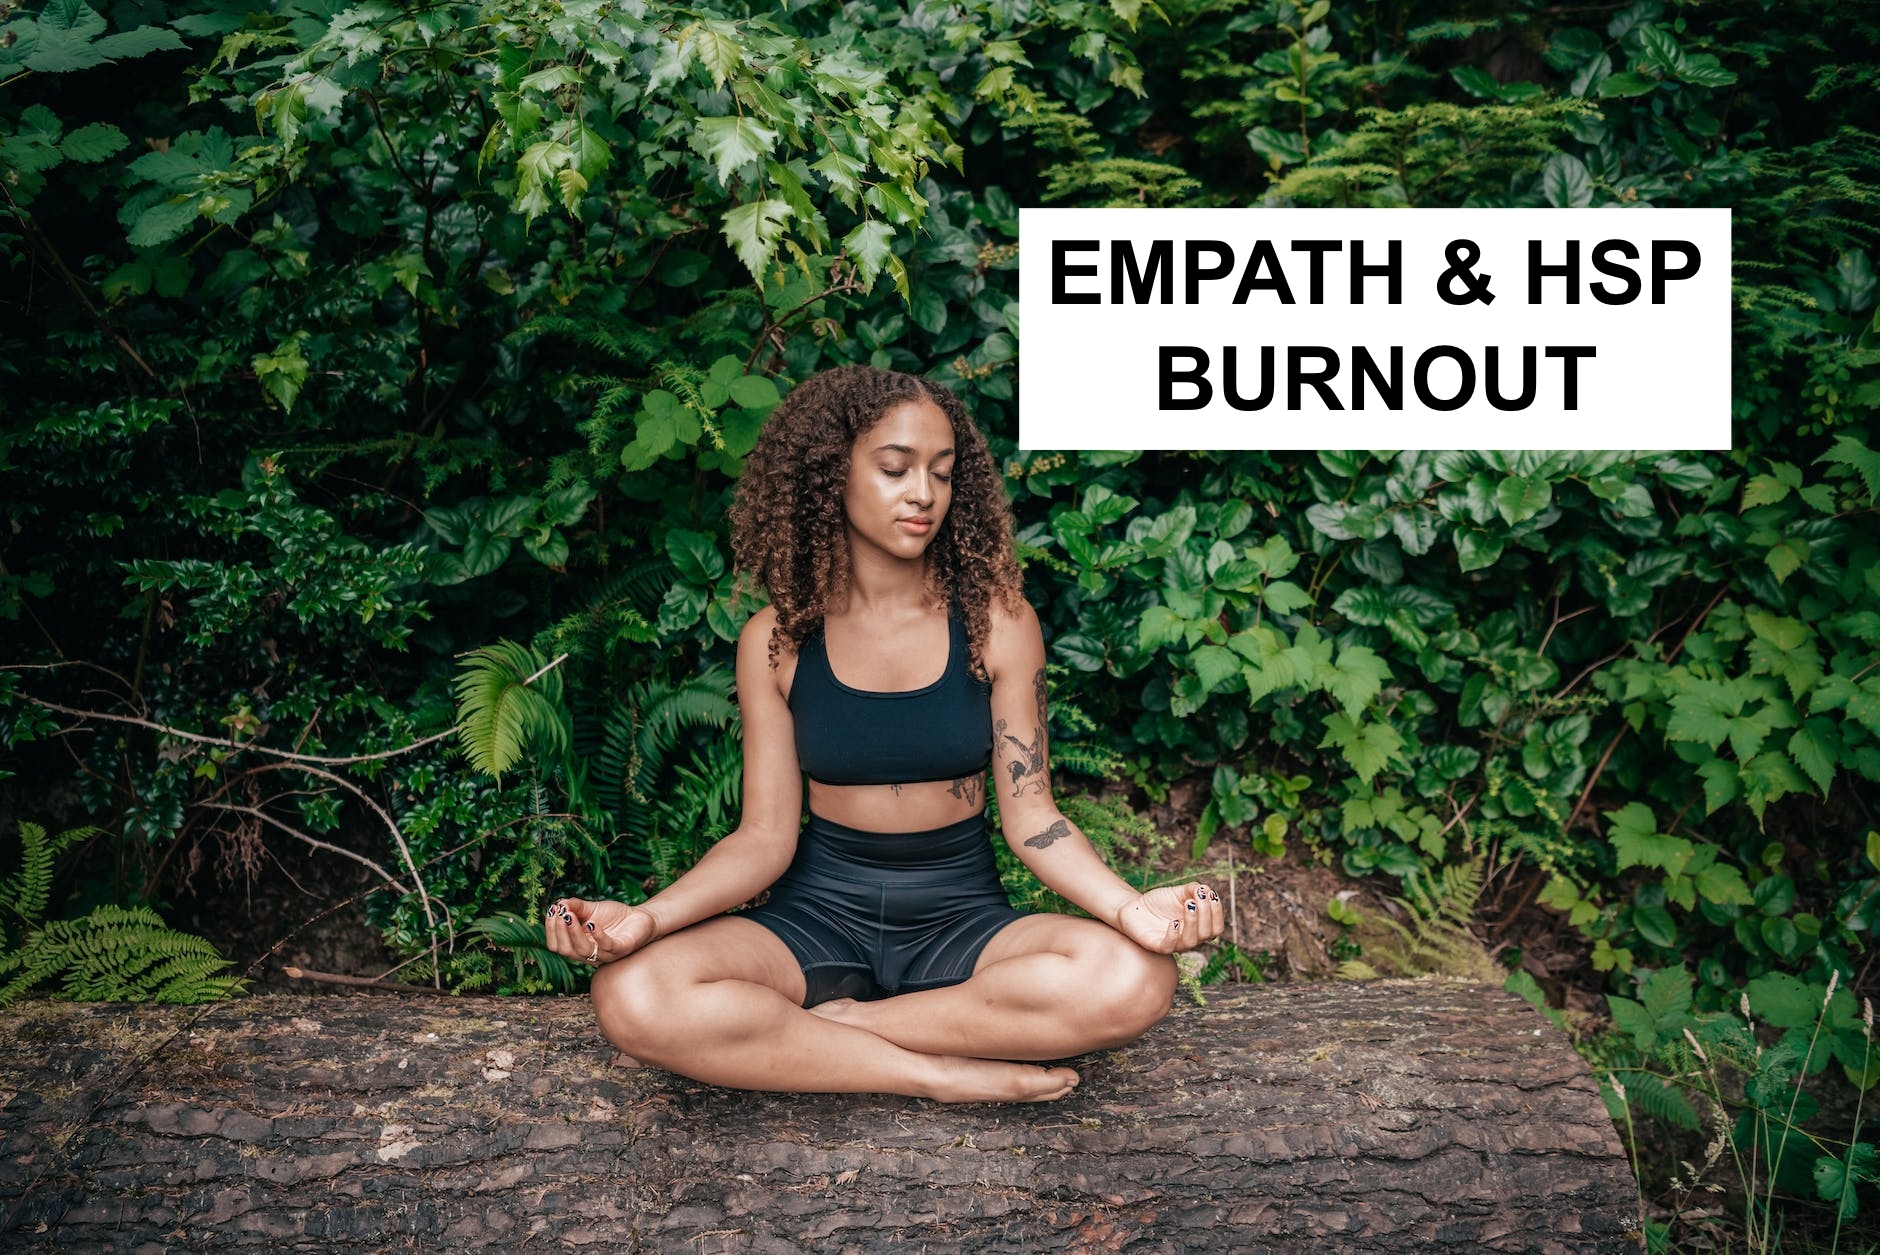 [FREE WEBINAR] HSP & EMPATH BURNOUT – Real Talk About Our Sensitive Soul And Burnout